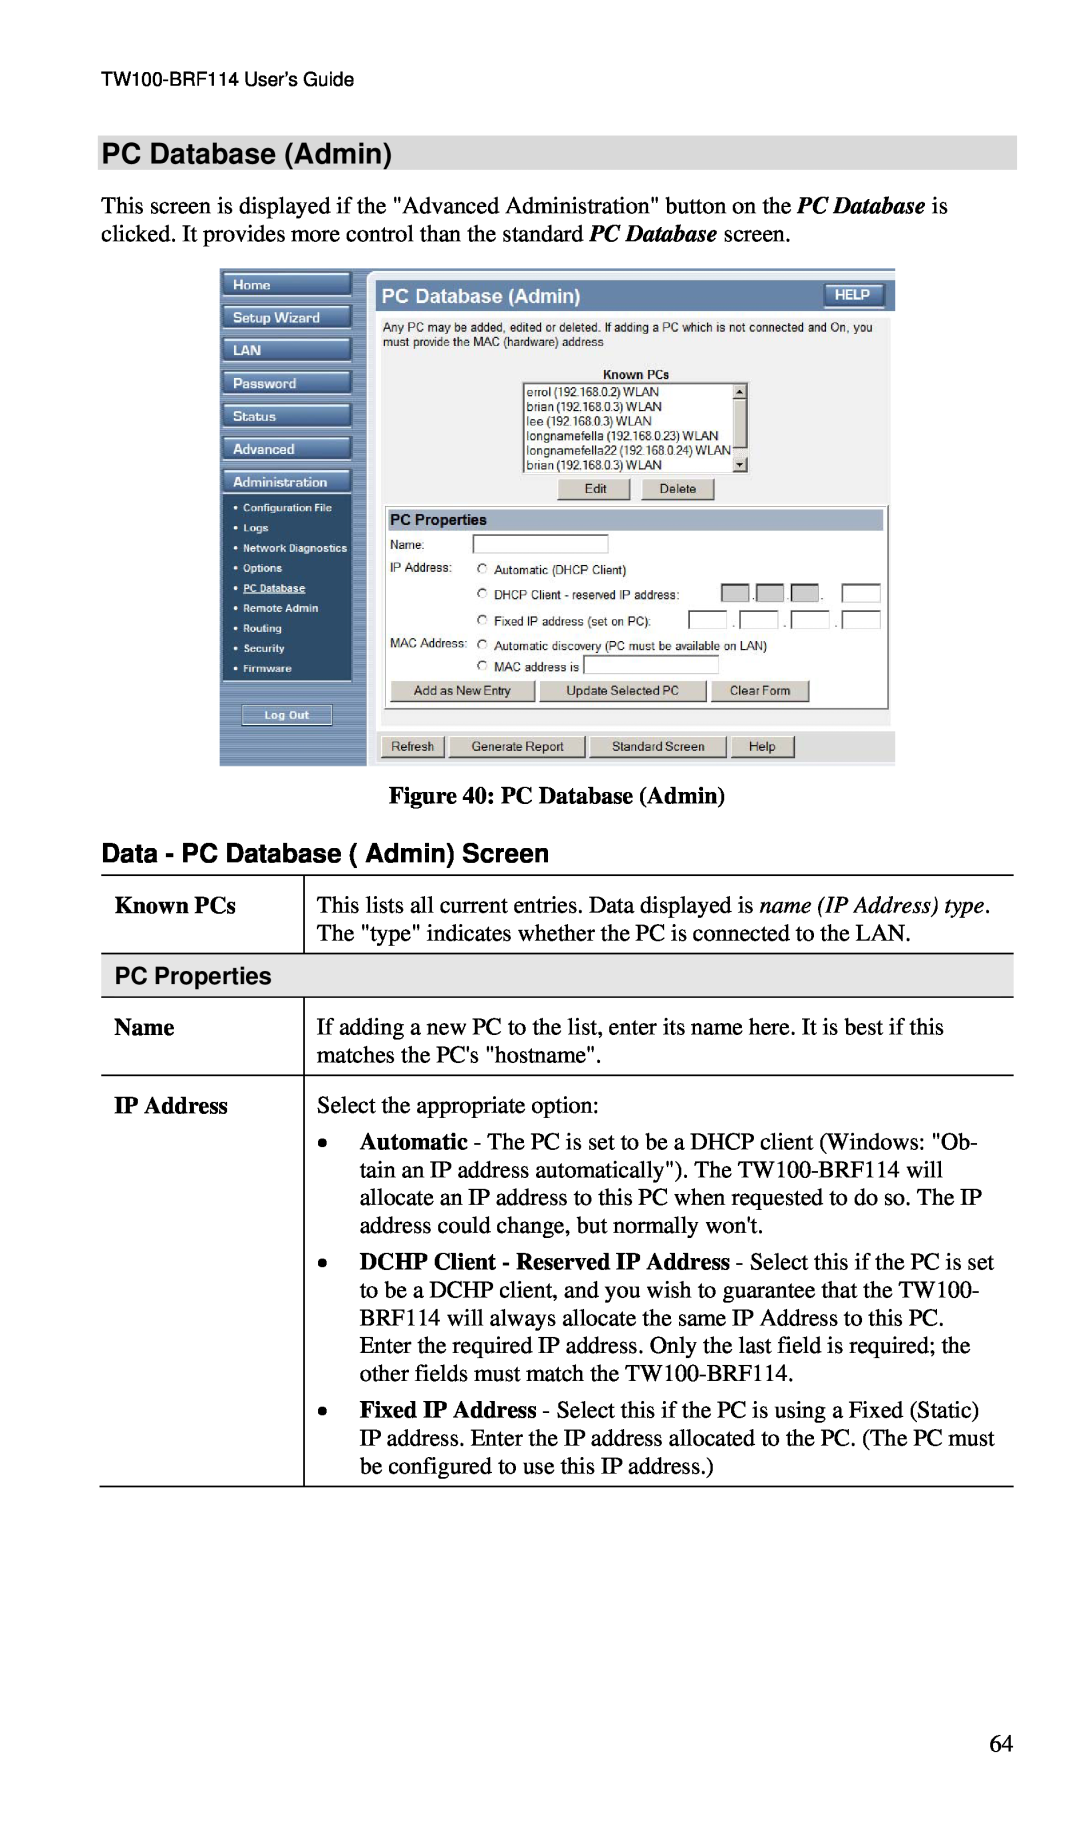 TRENDnet BRF114 manual PC Database Admin, Known PCs, PC Properties, Name, IP Address 